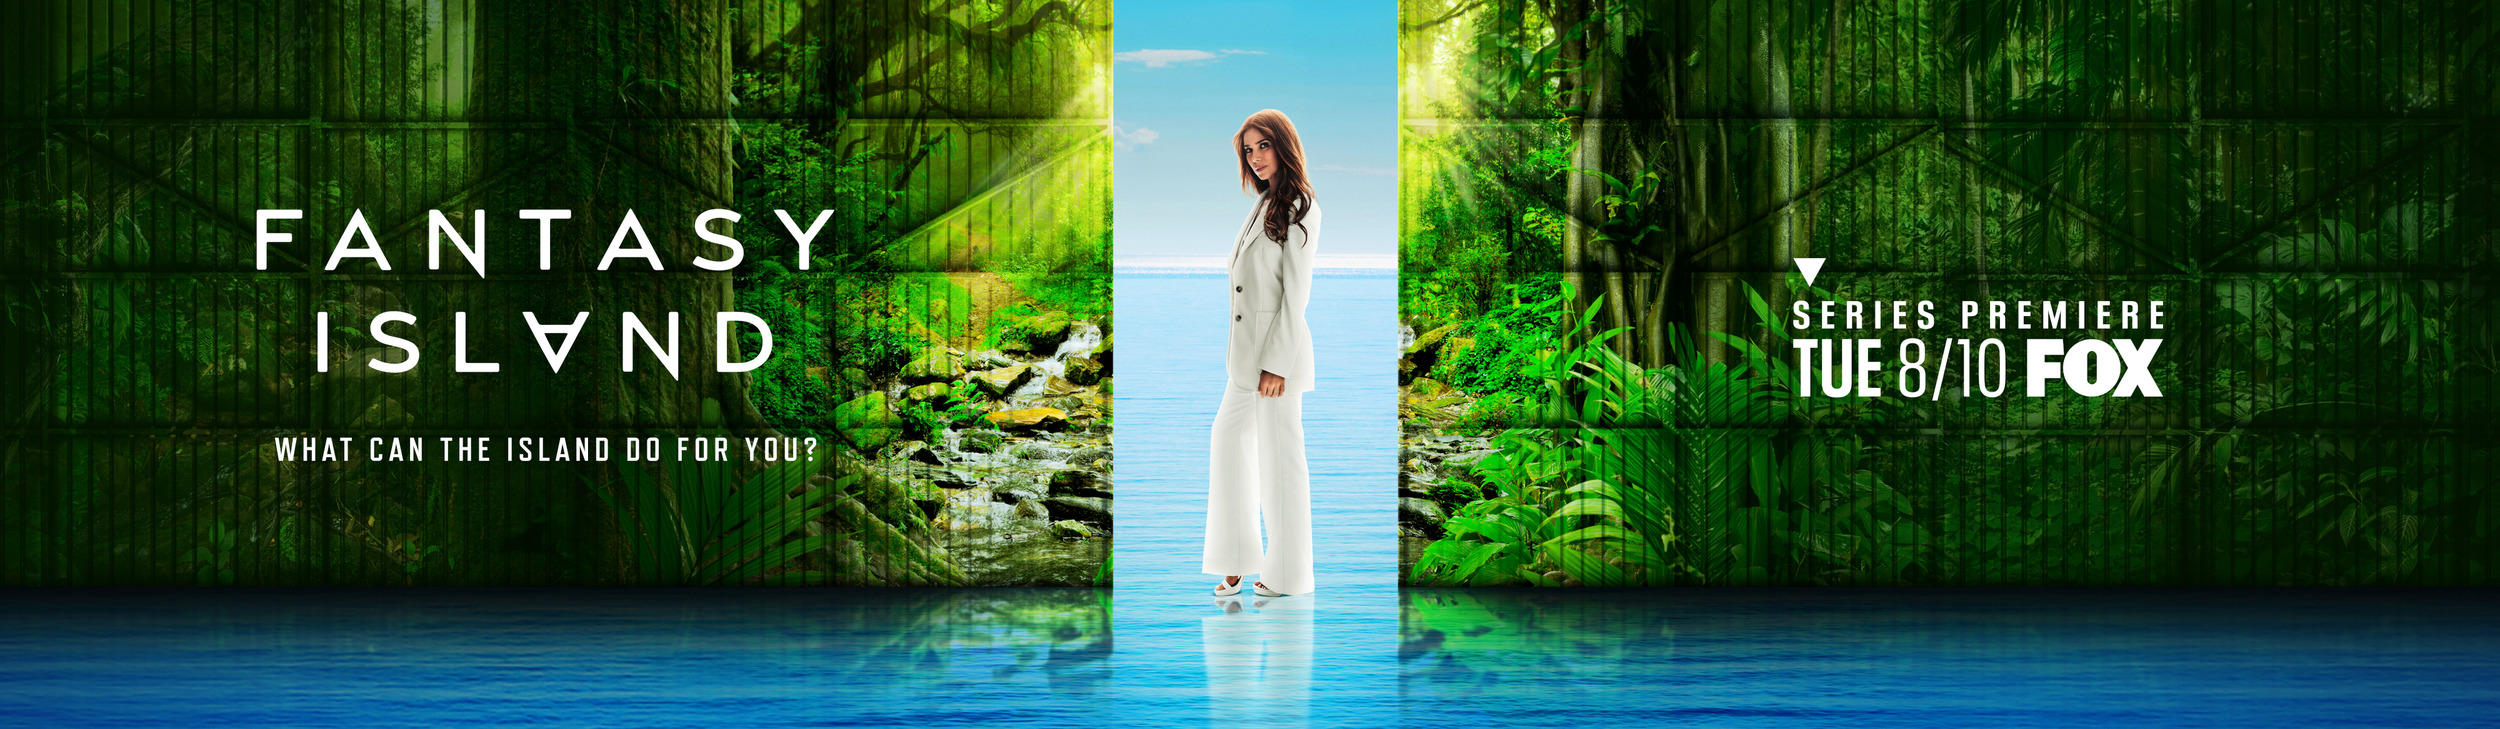 Mega Sized TV Poster Image for Fantasy Island (#4 of 4)